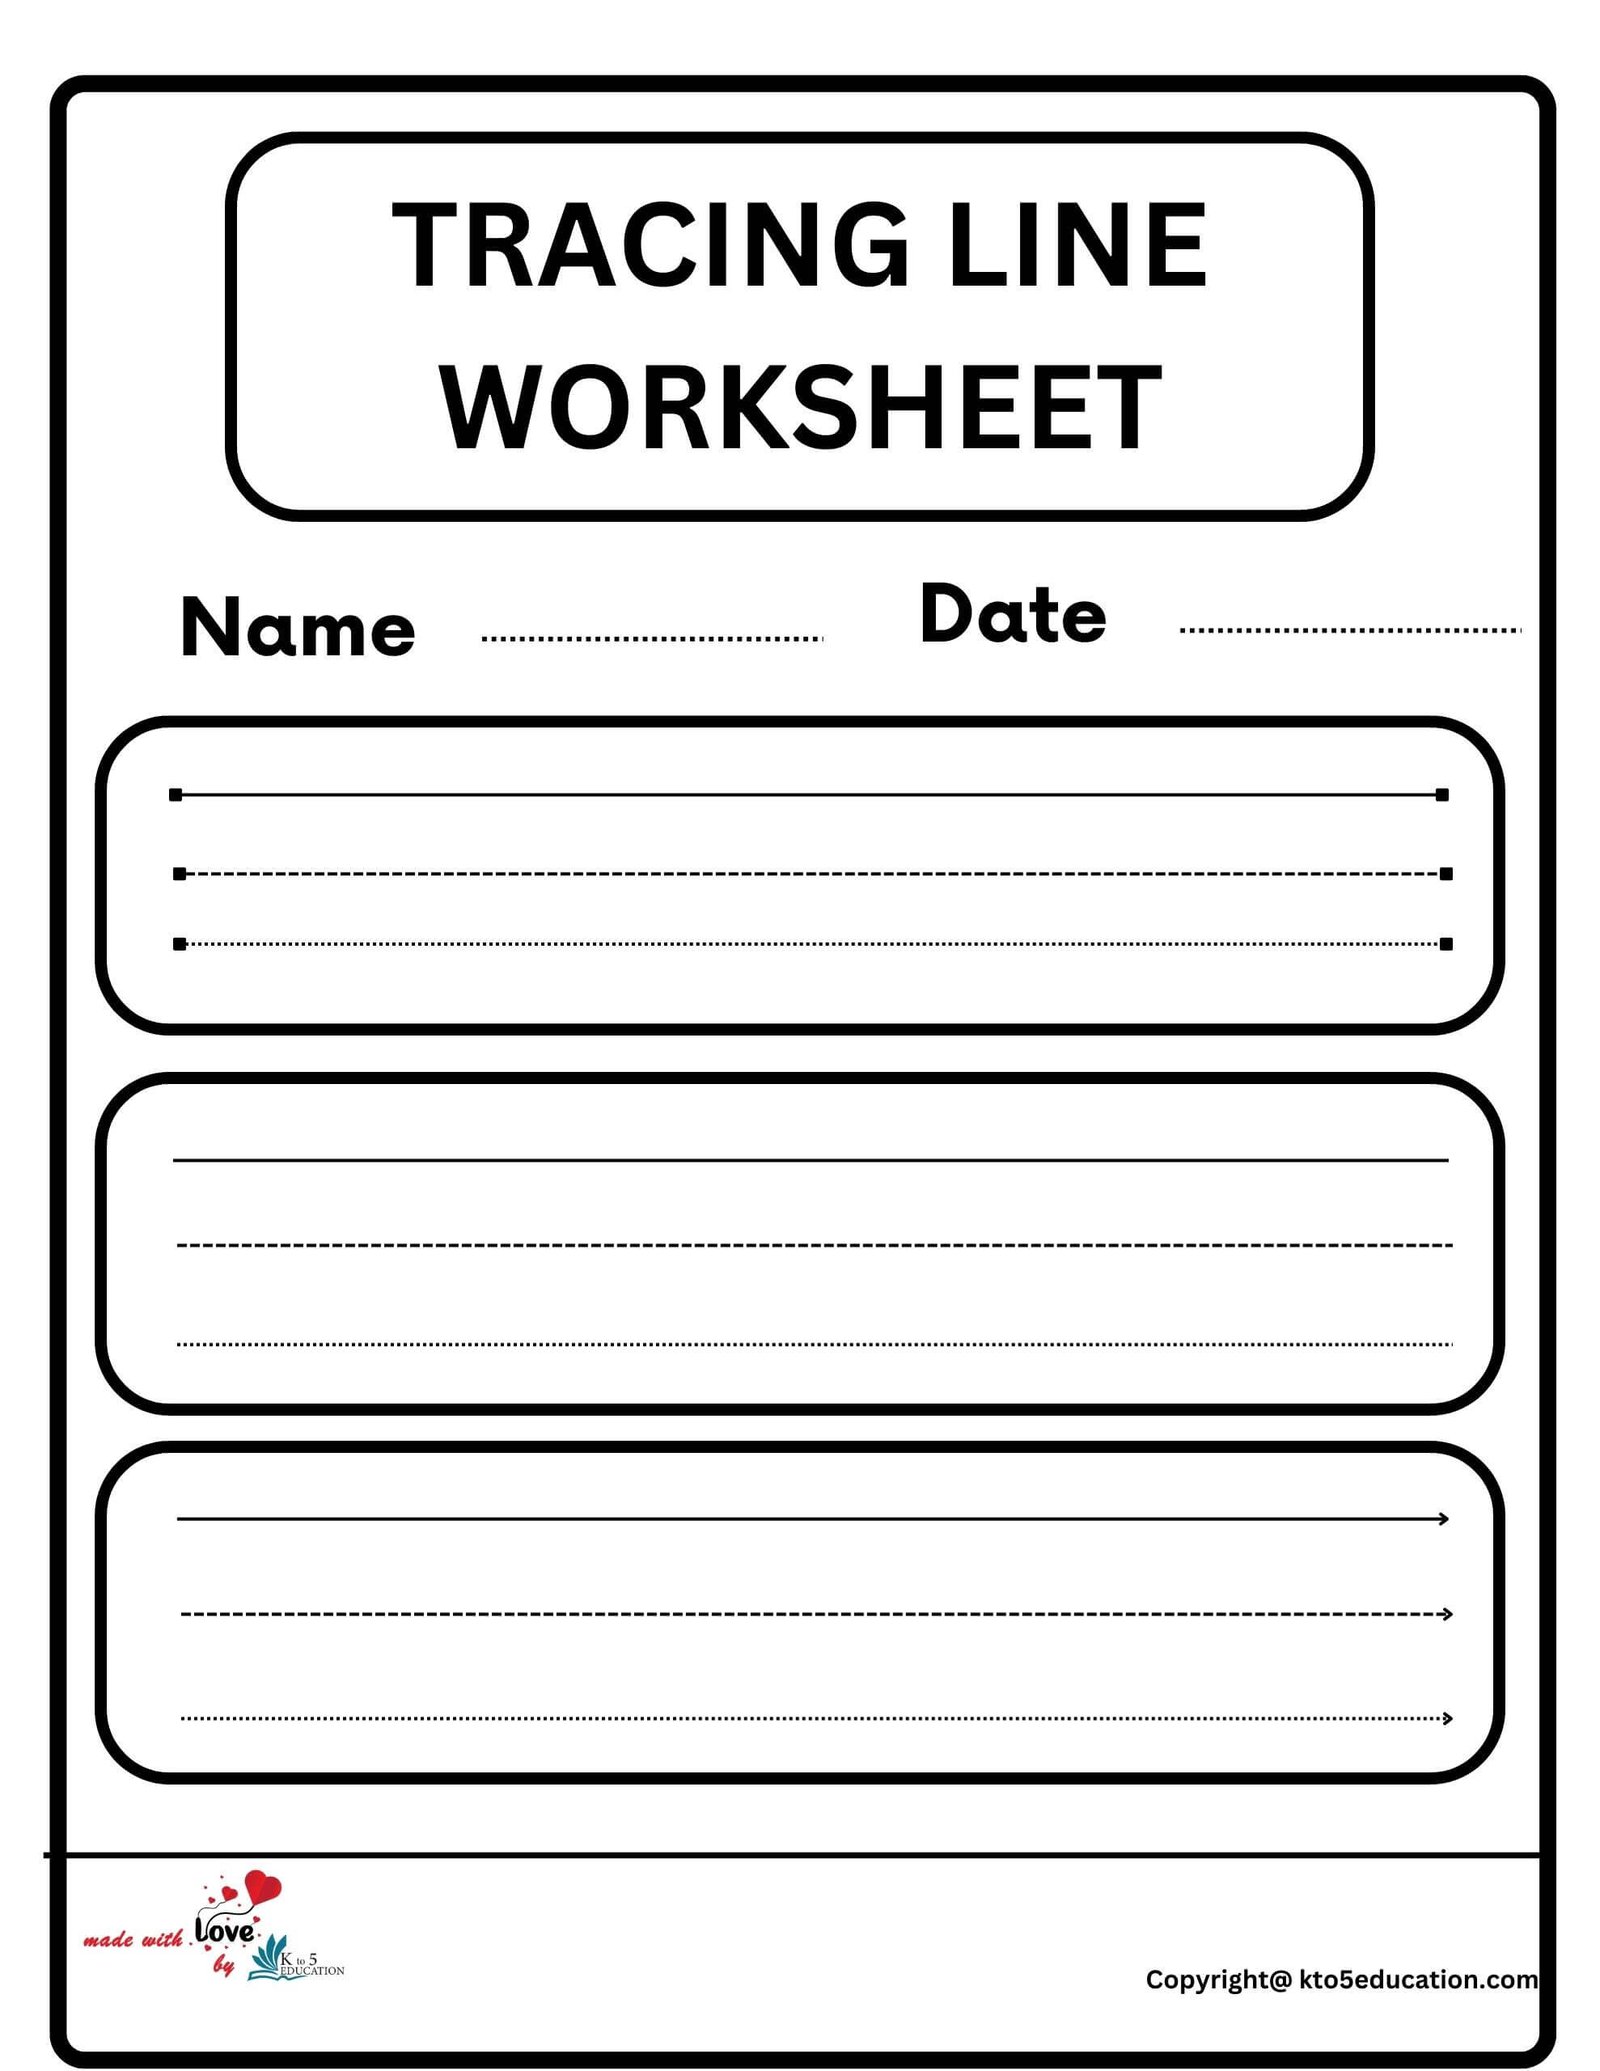 Line Tracing Worksheet | FREE Download 1